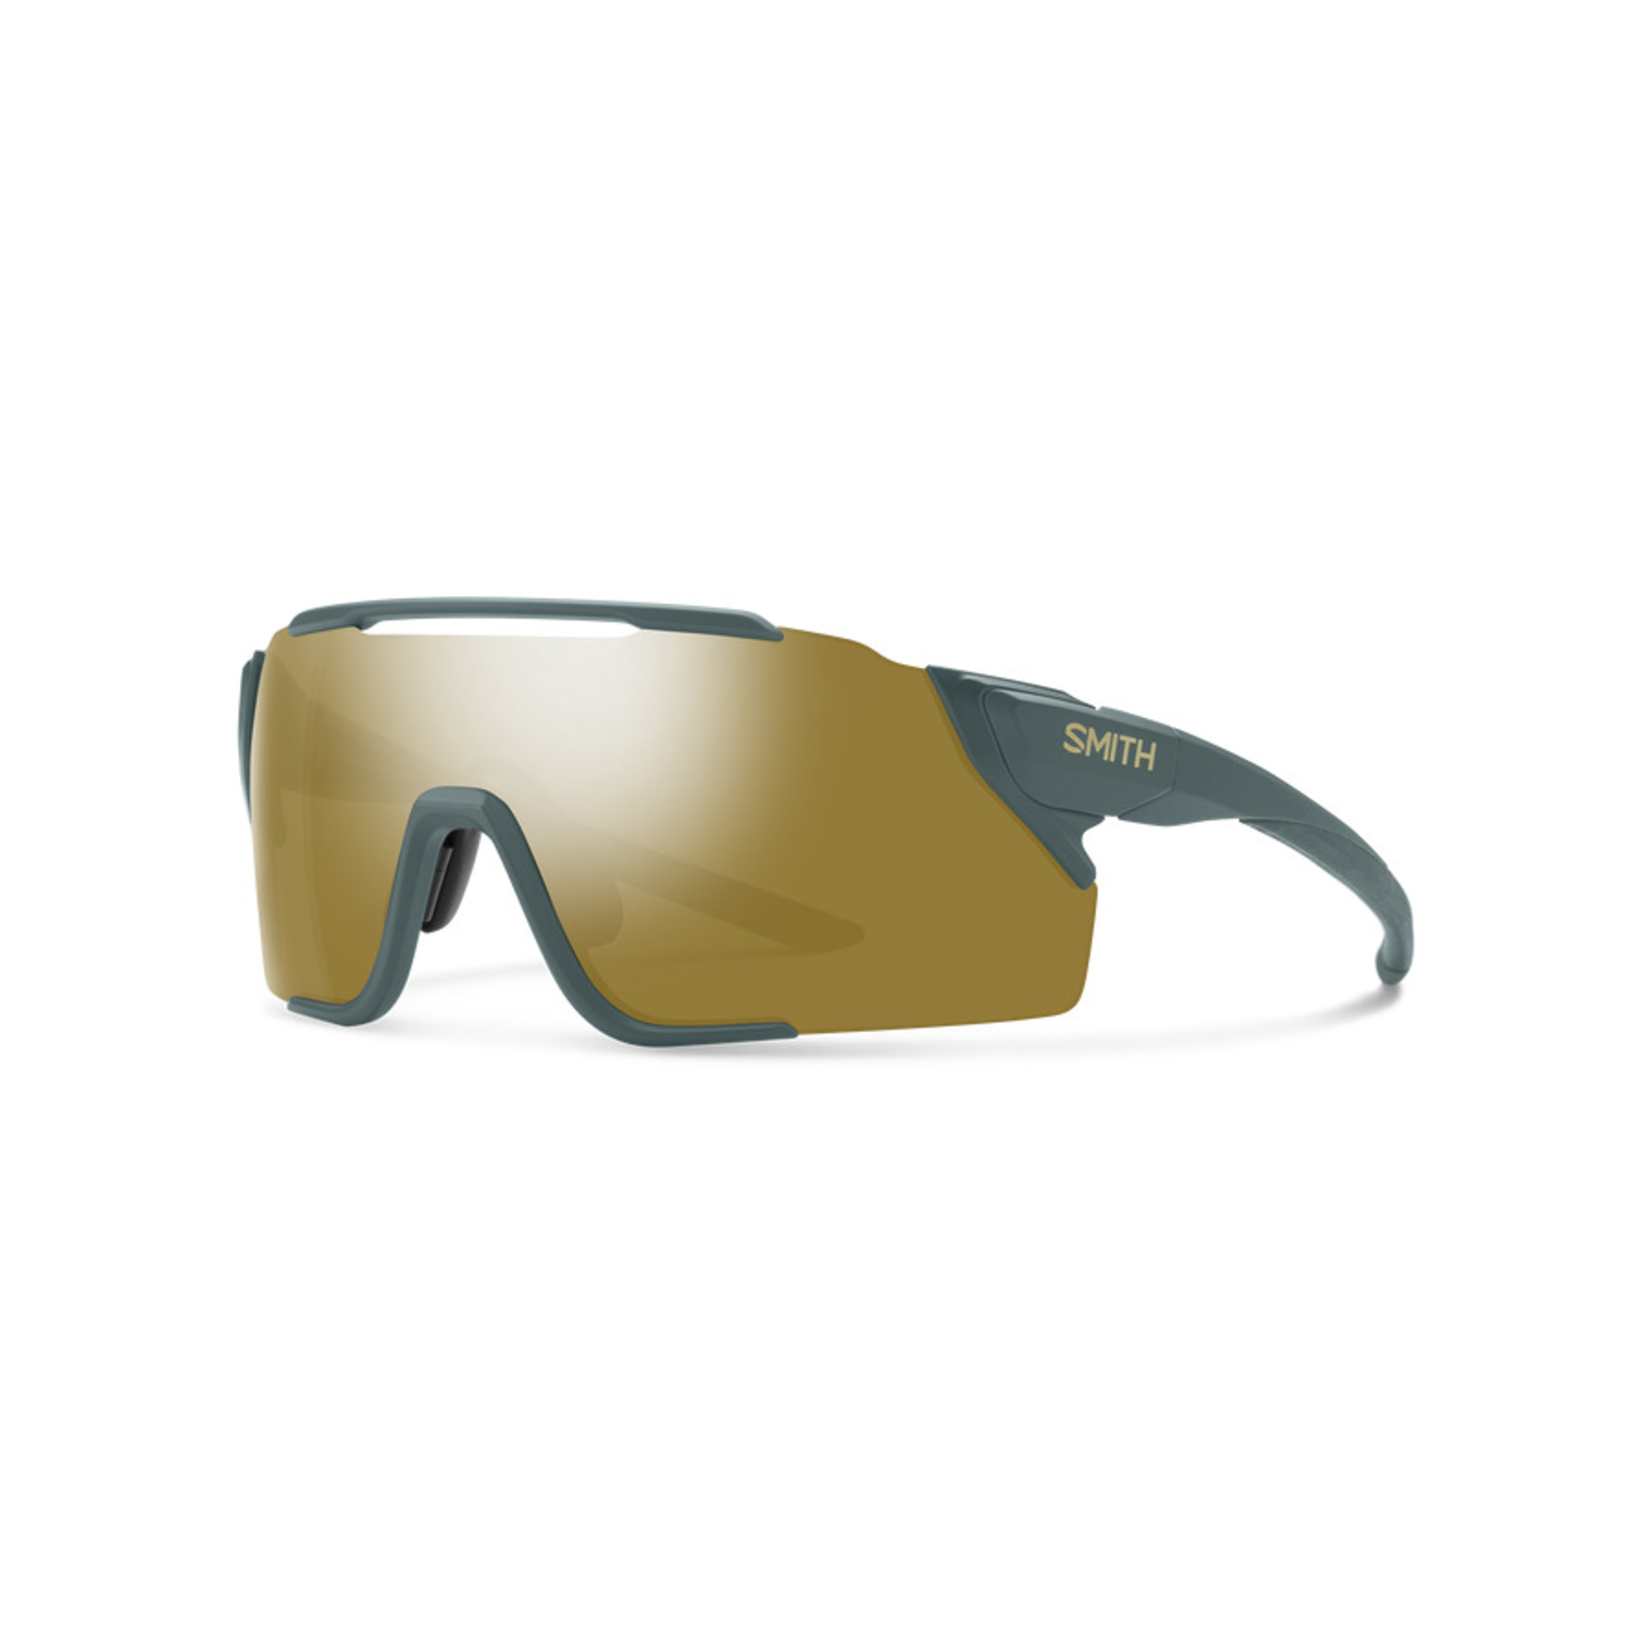 Smith Optics Smith Attack MAG MTB Sunglasses Matte Spruce + Chromapop Bronze Mirror Lens